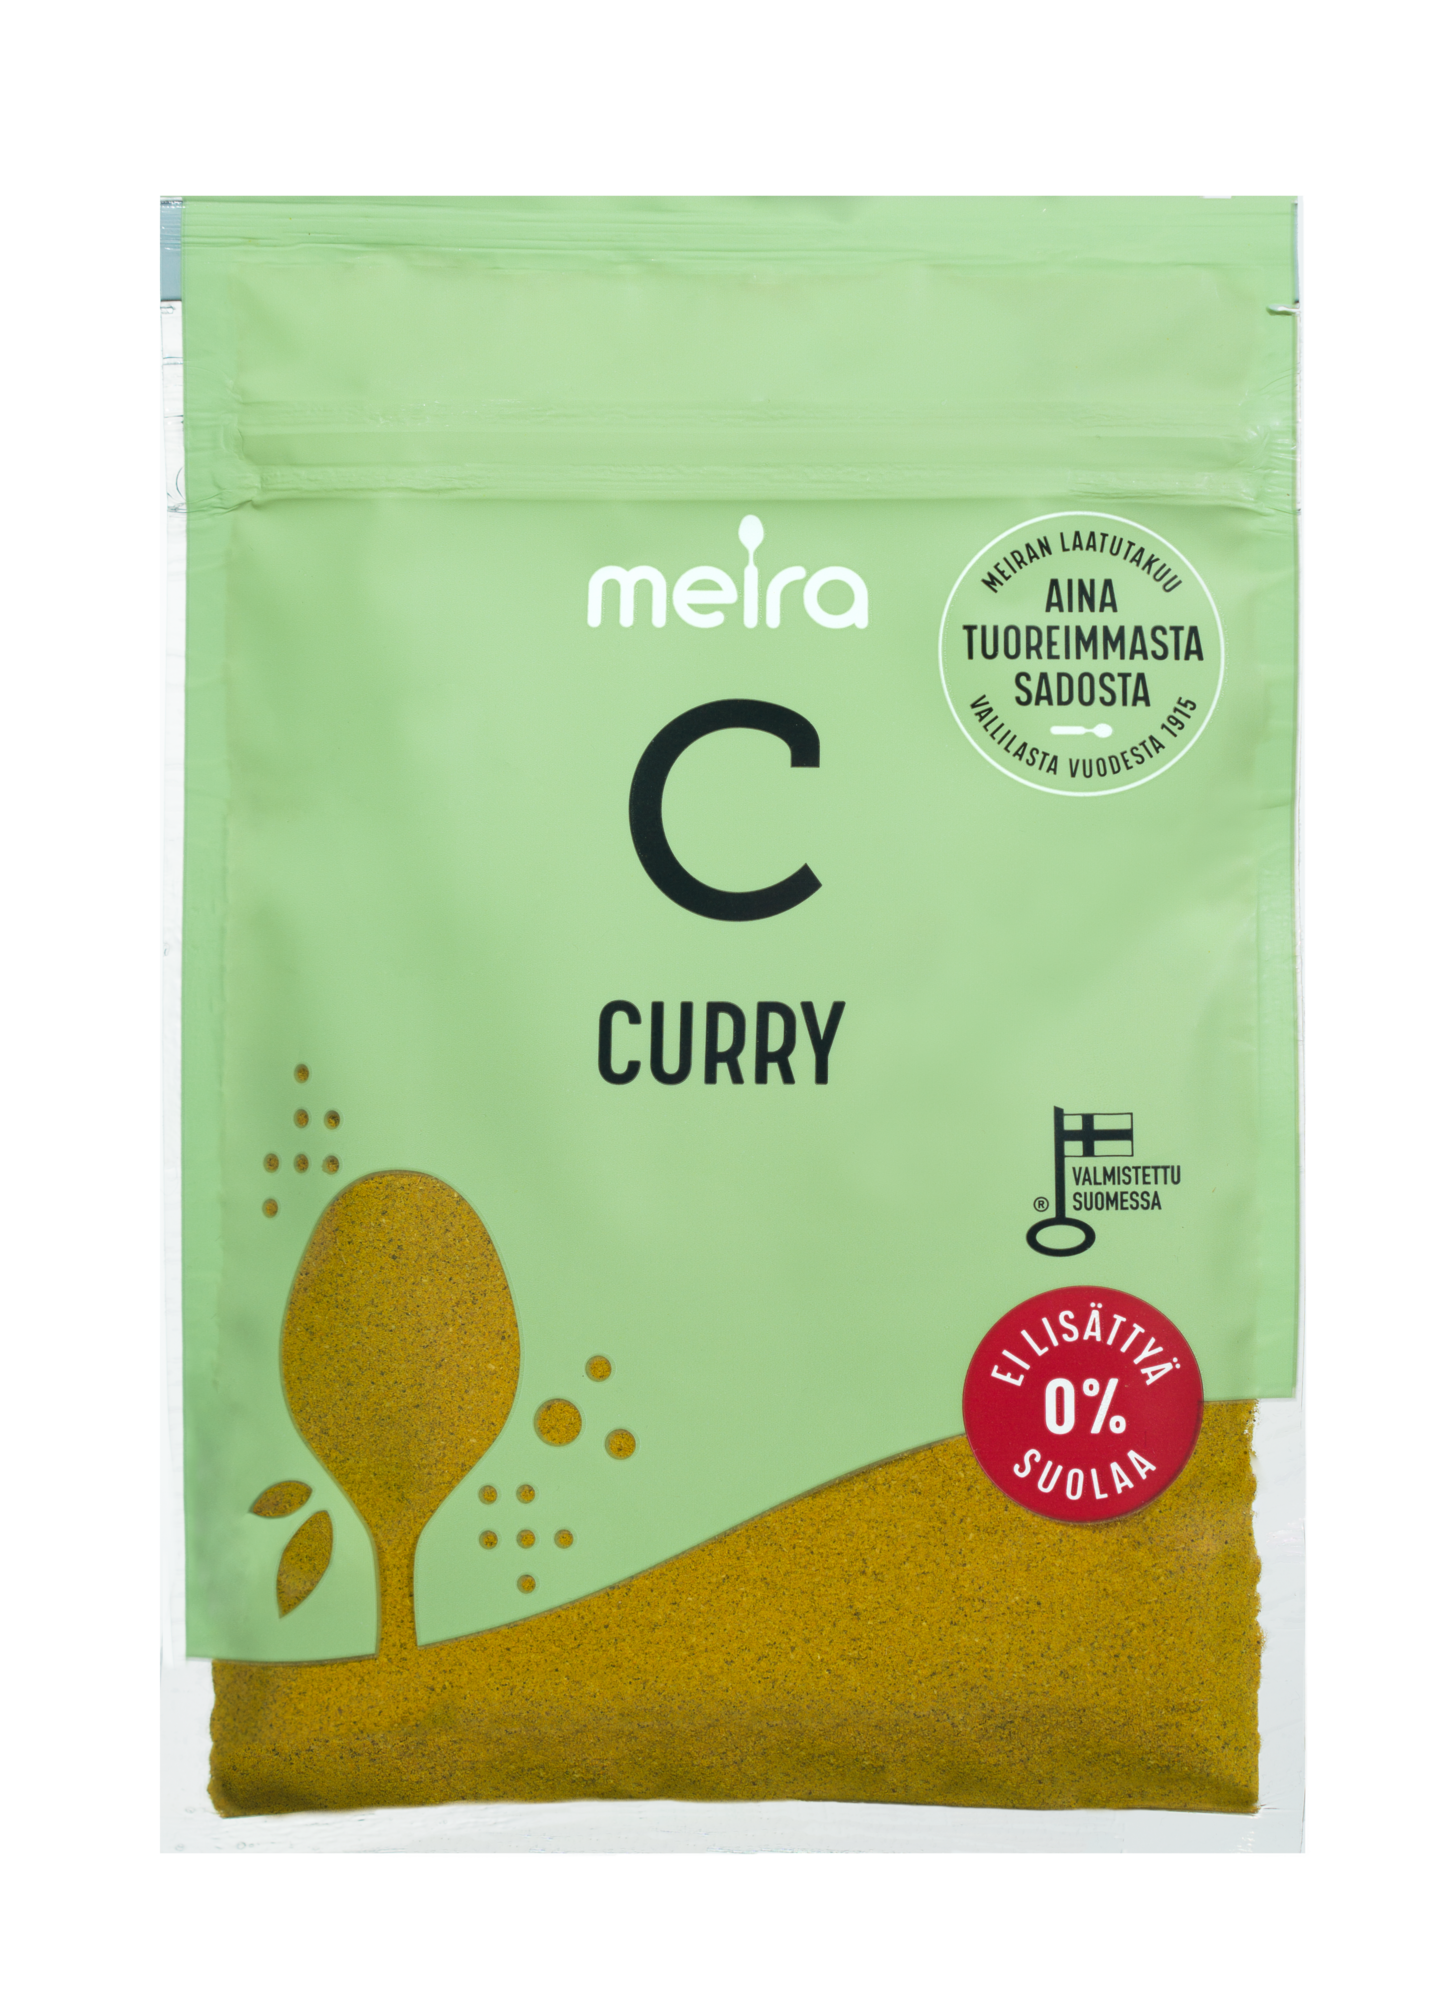 Meira Curry 65 g suolaton